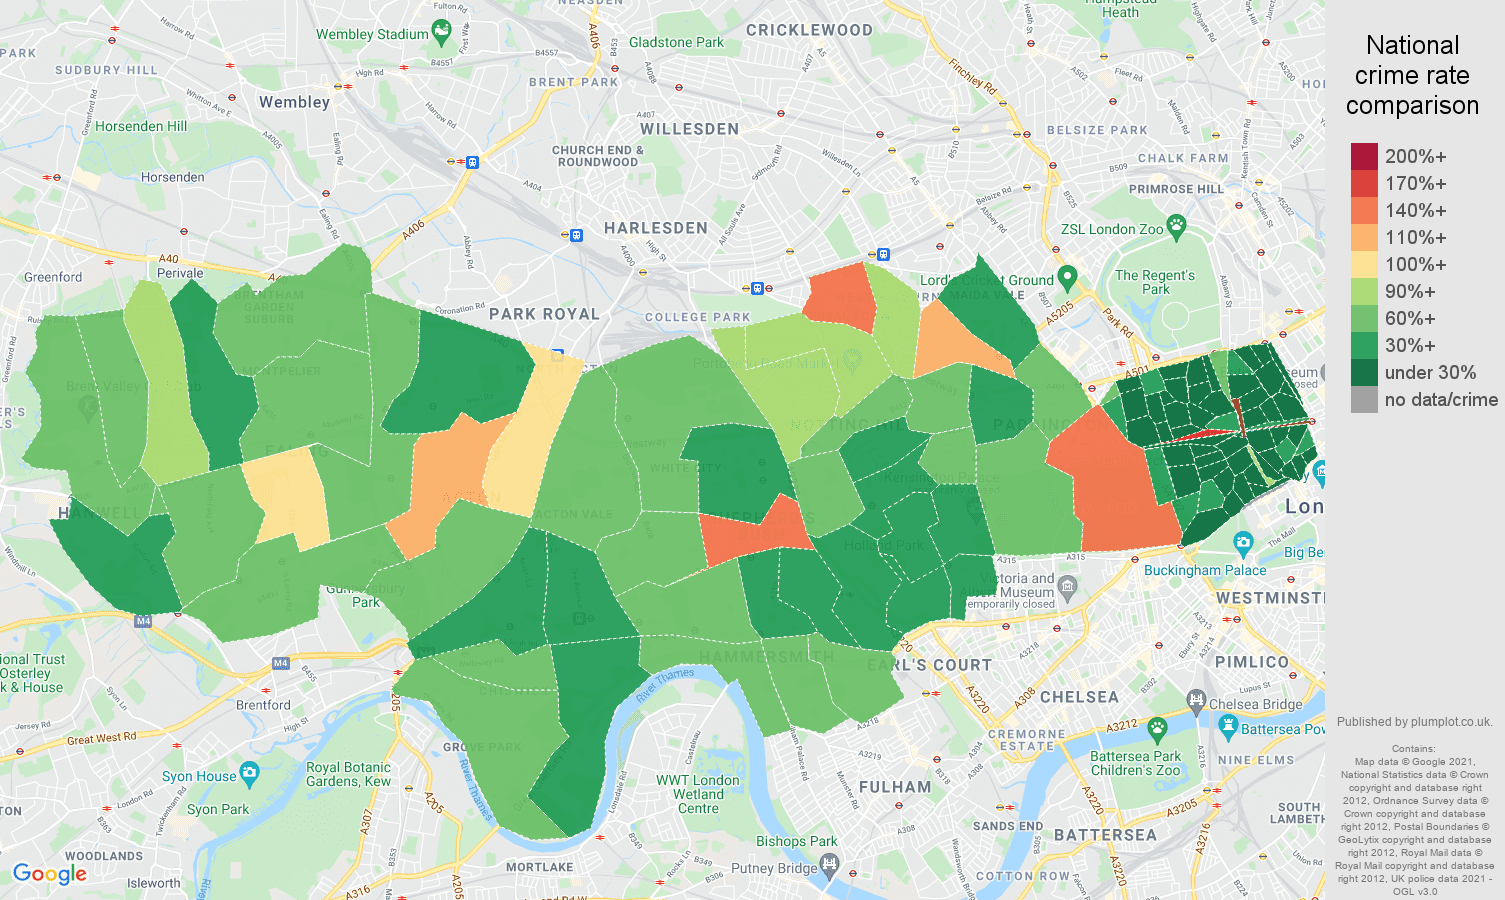 West London criminal damage and arson crime rate comparison map